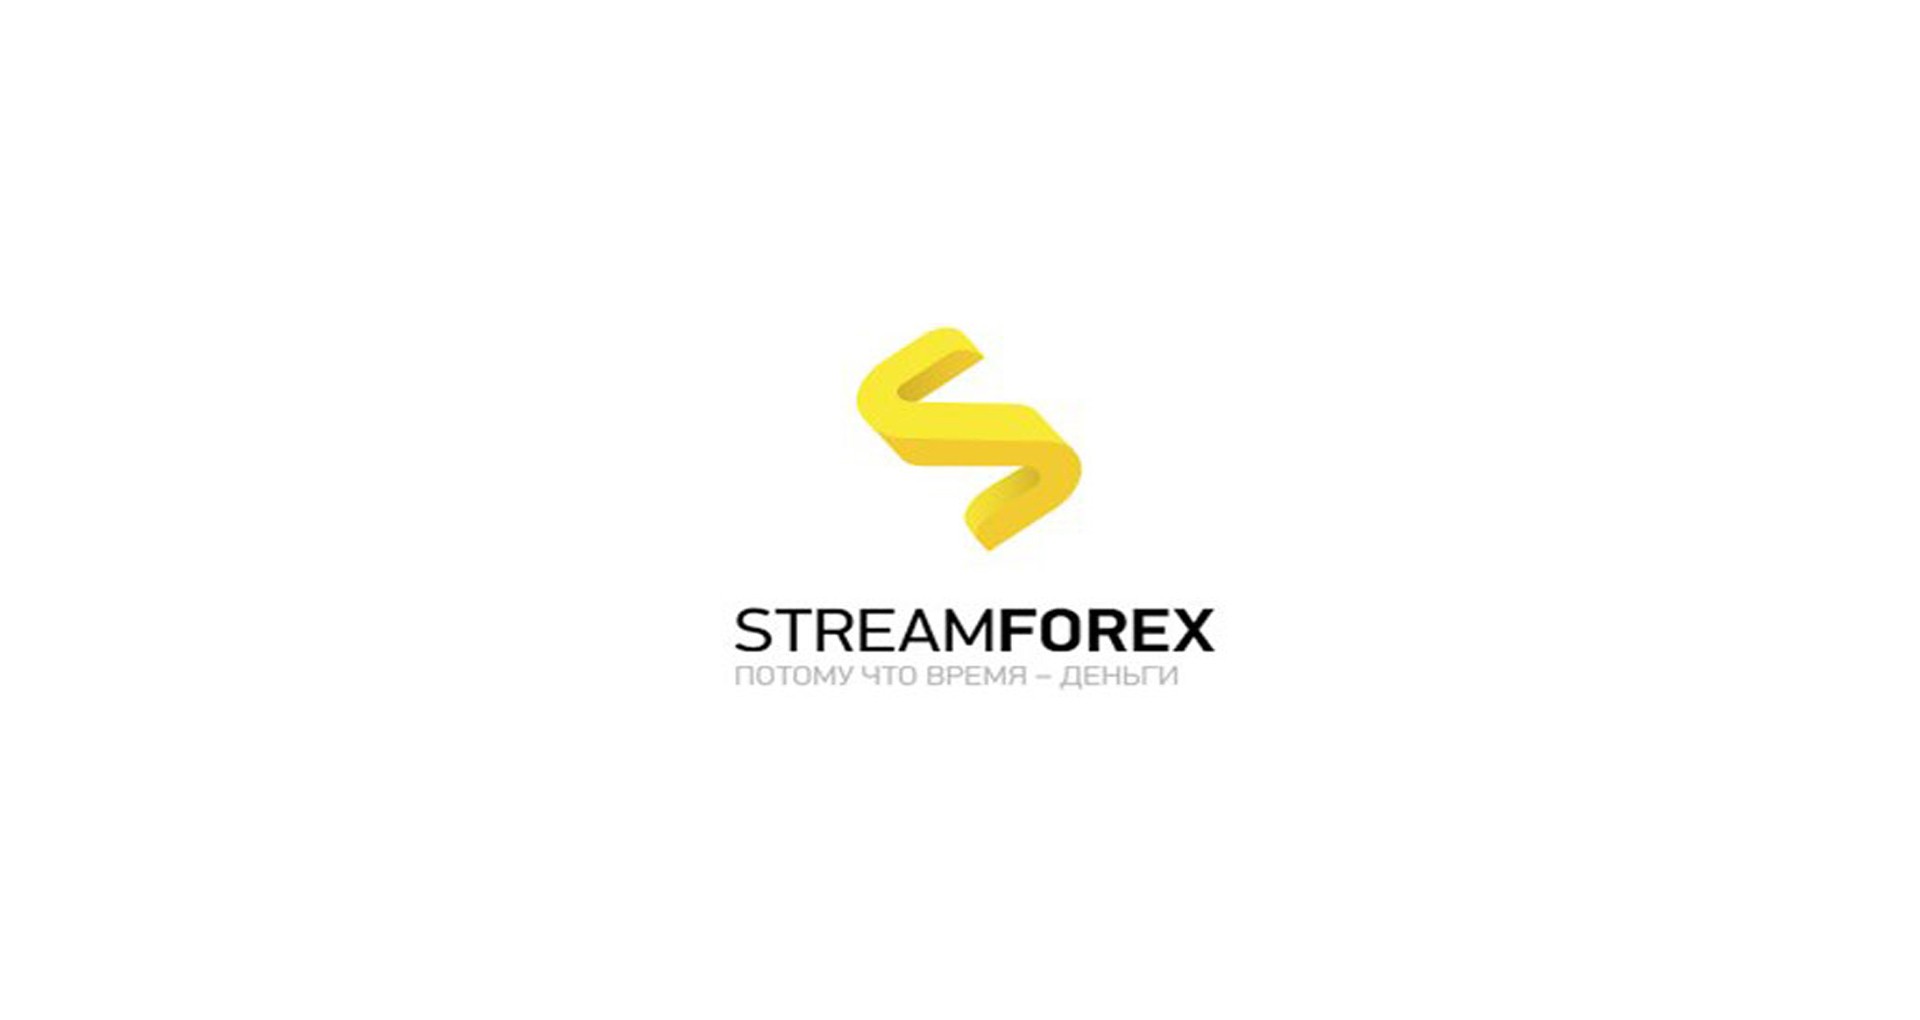 STREAMFOREX. Stream forex. Royal Financial trading. Stream fx